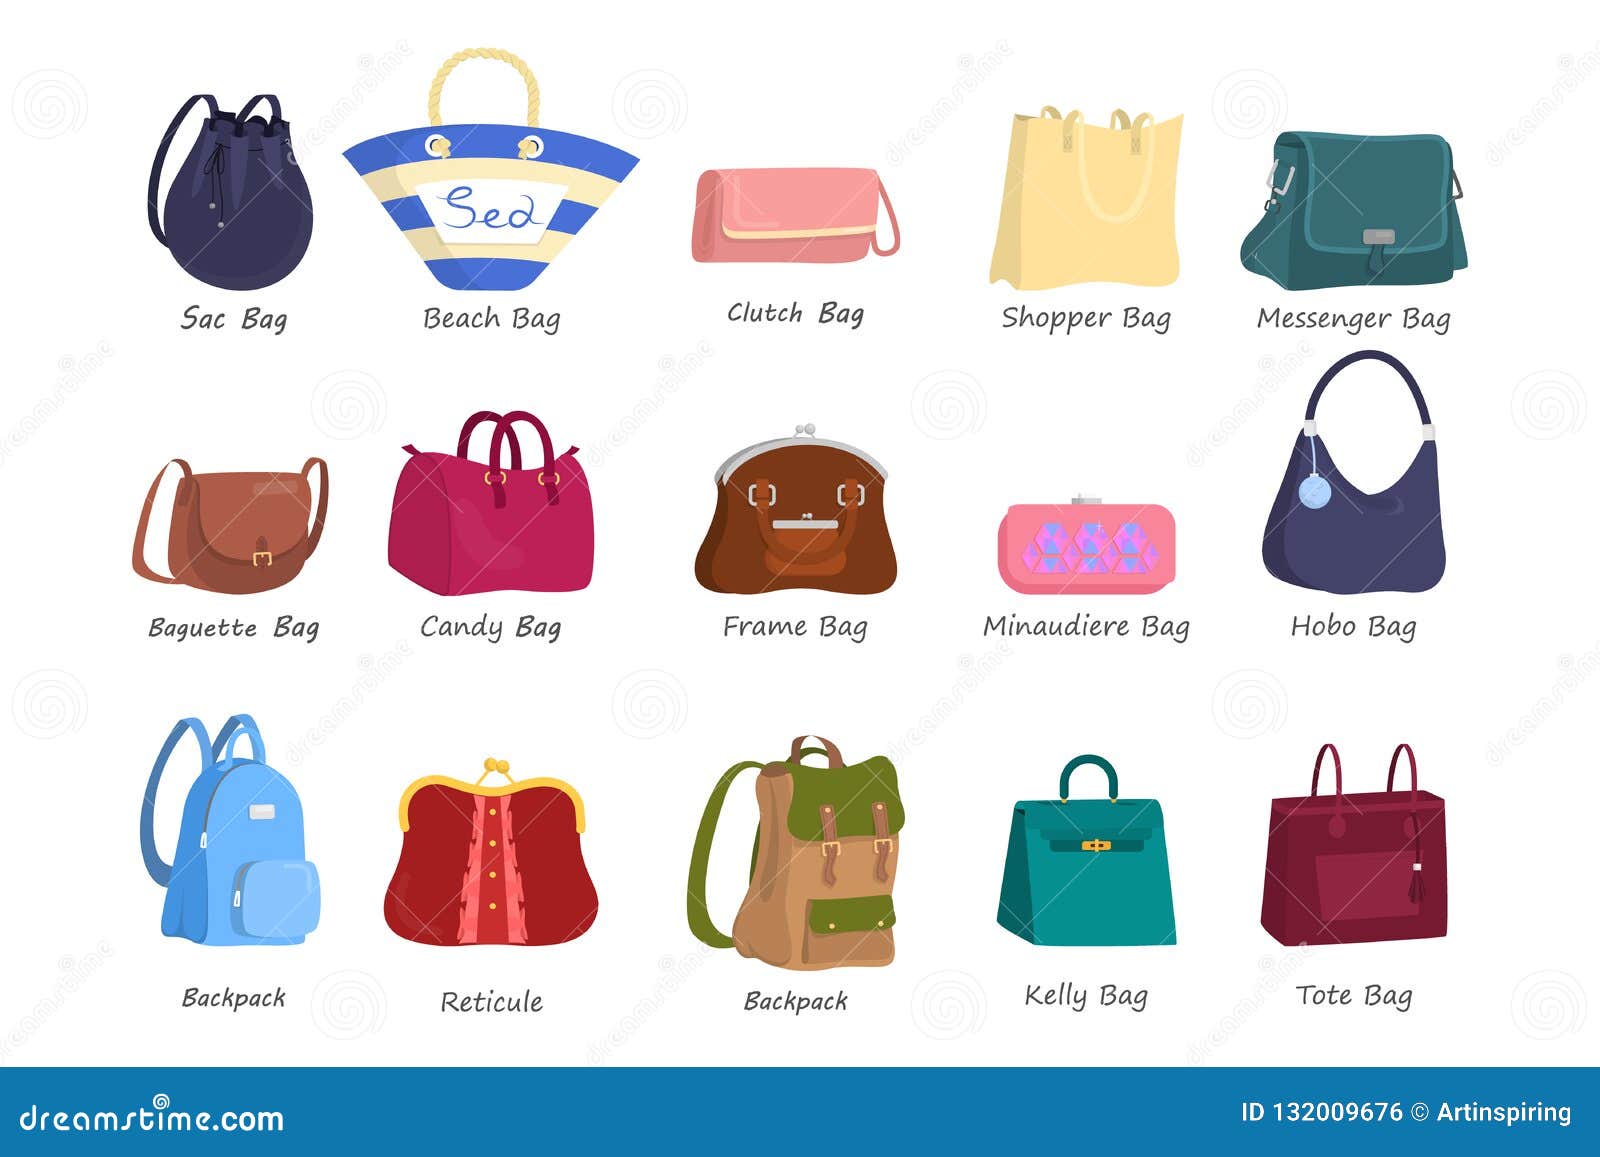 Bag For Women Set. Collection Of Handbag Stock Vector - Illustration of silhouette, duffle ...